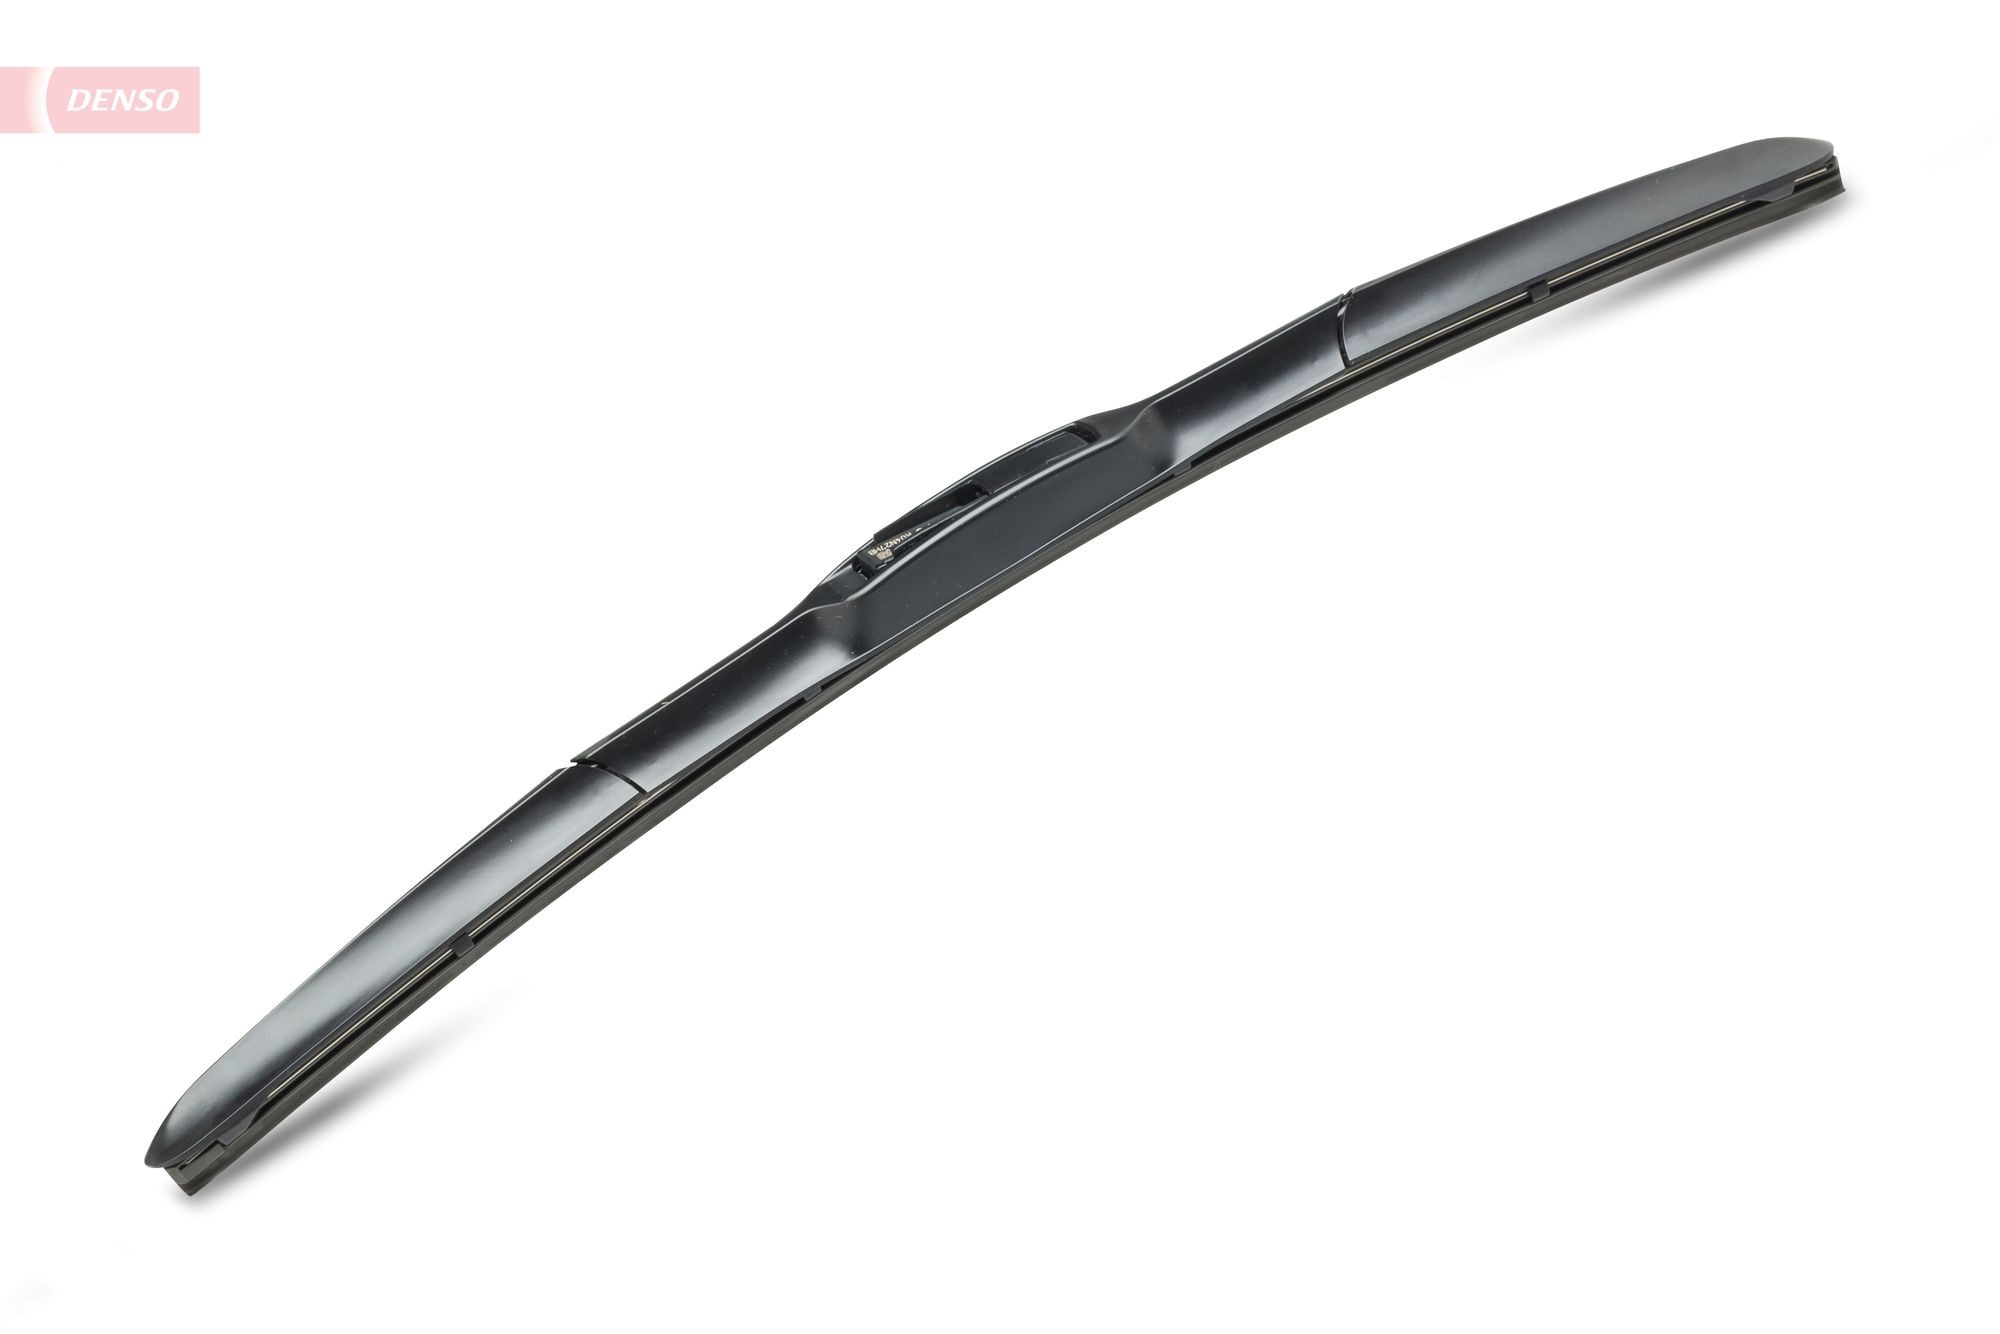 DUR-045R DENSO Windscreen wipers FORD 450 mm, Hybrid Wiper Blade, 18 Inch